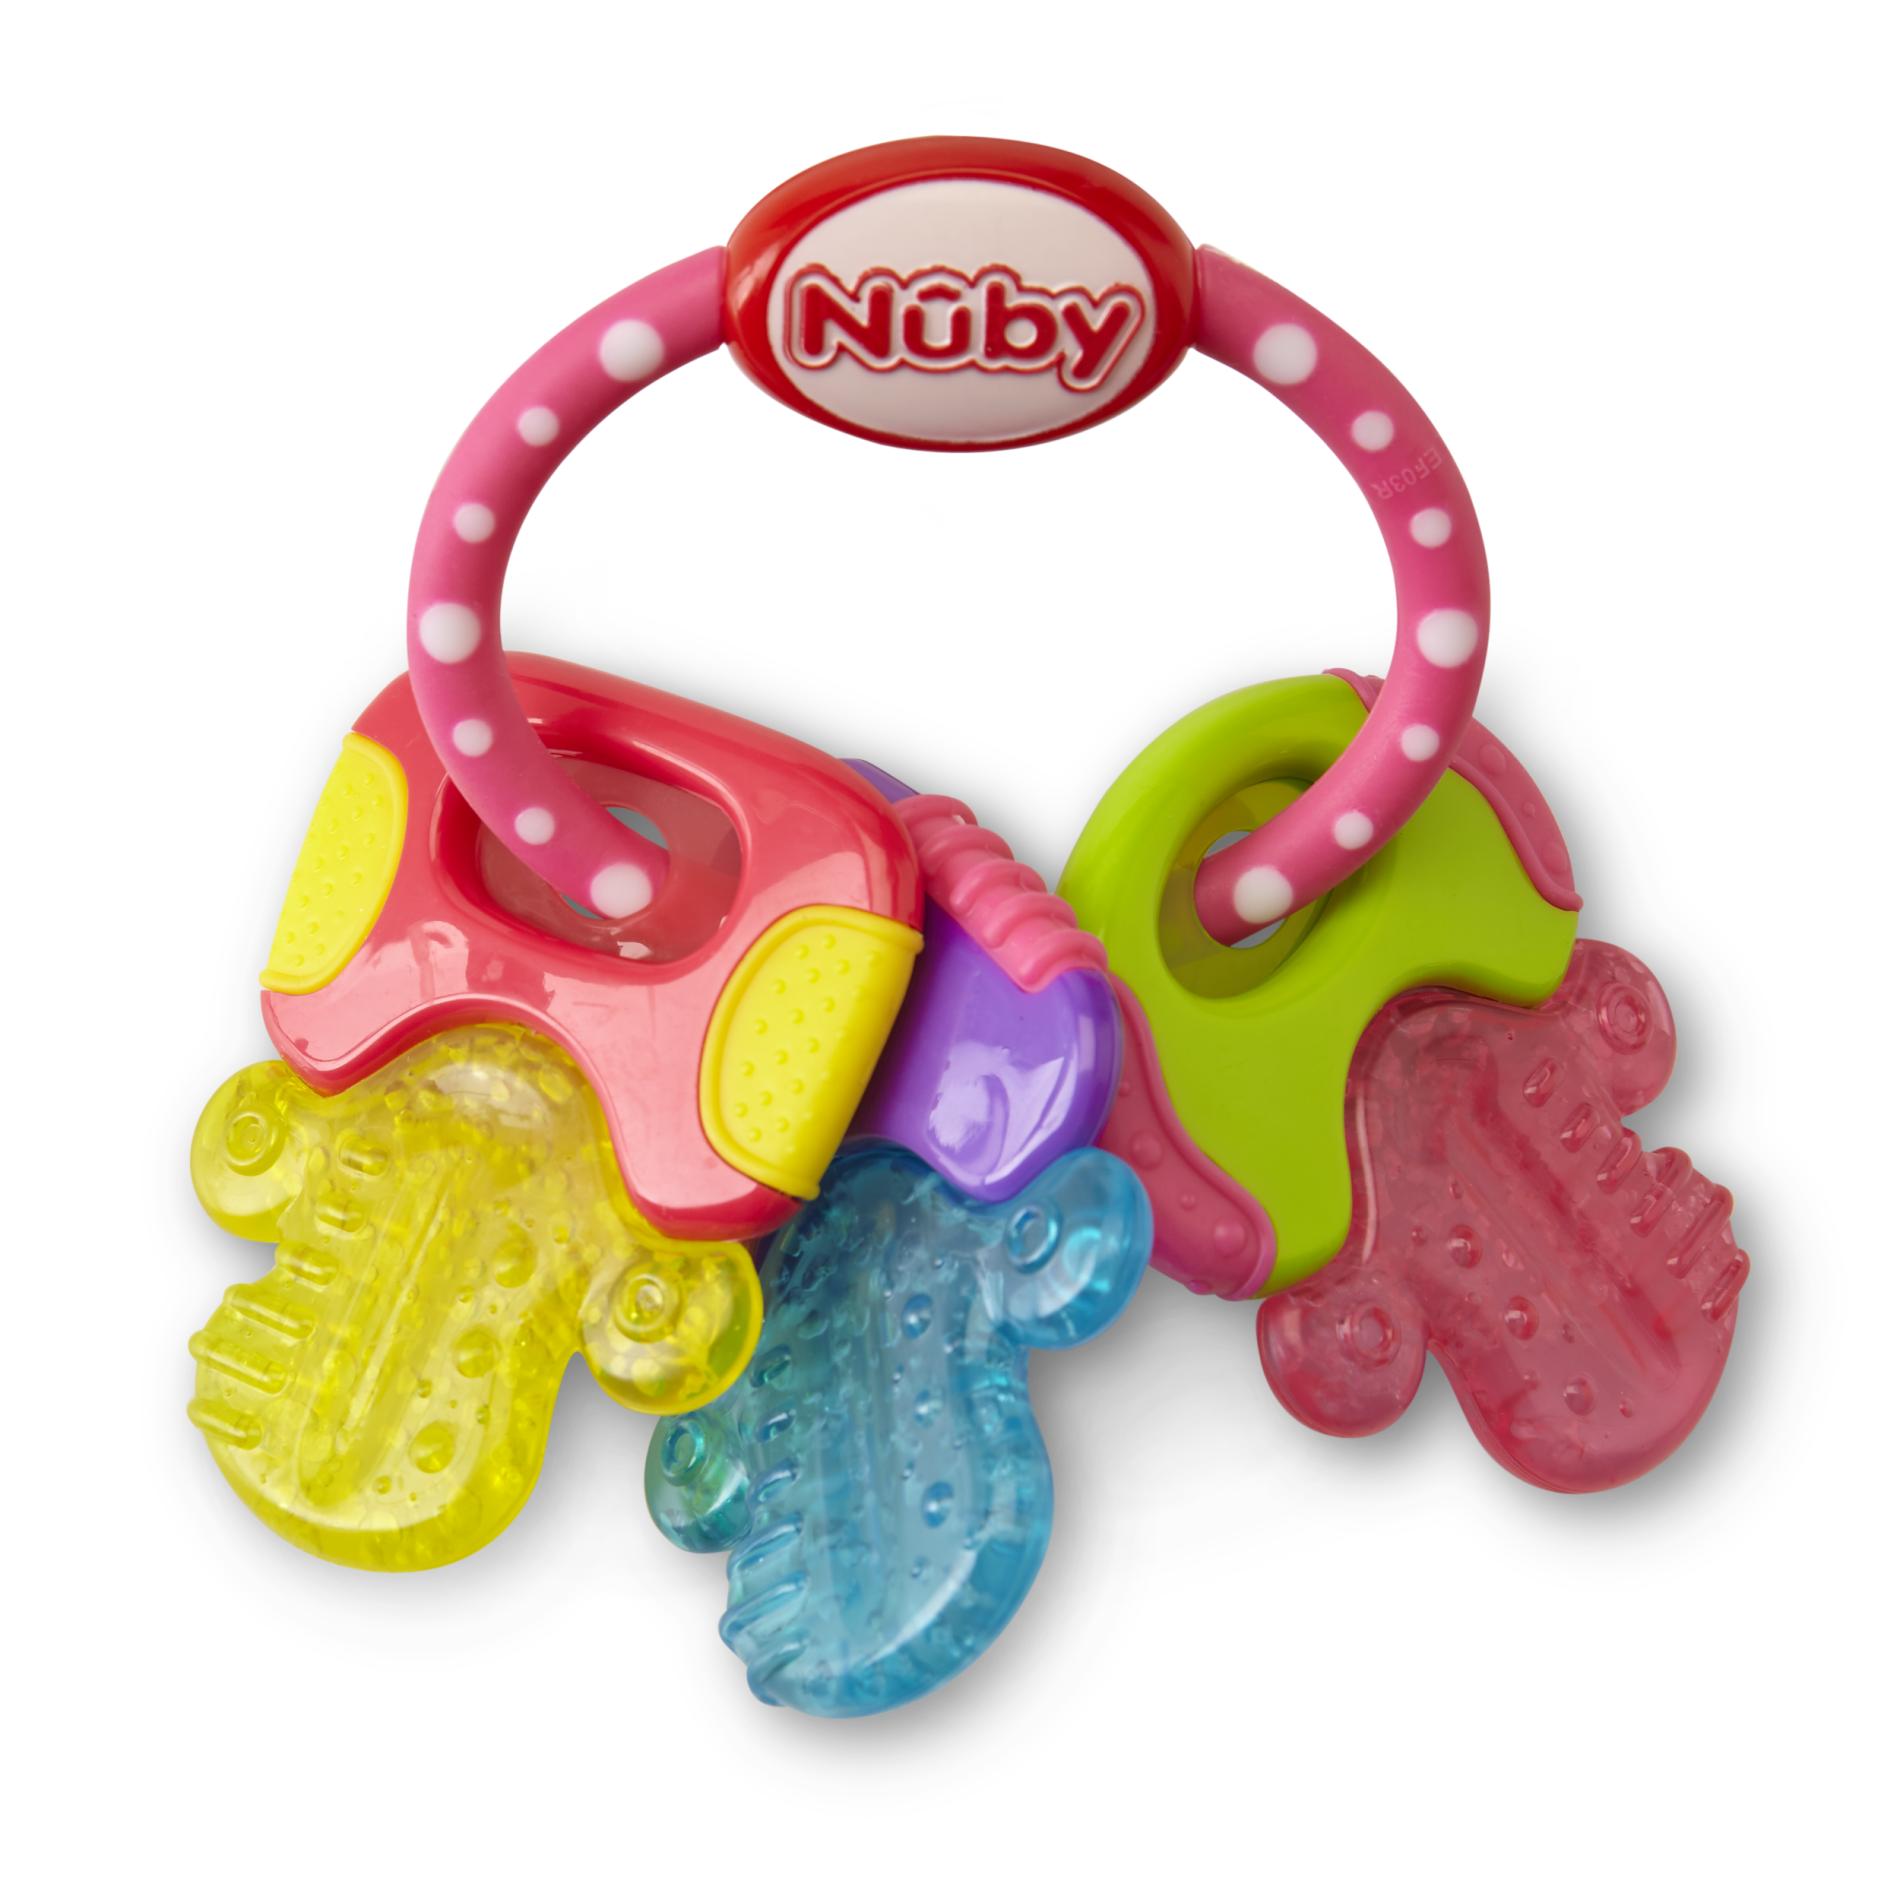 Nuby Infants' IcyBite Keys Teether